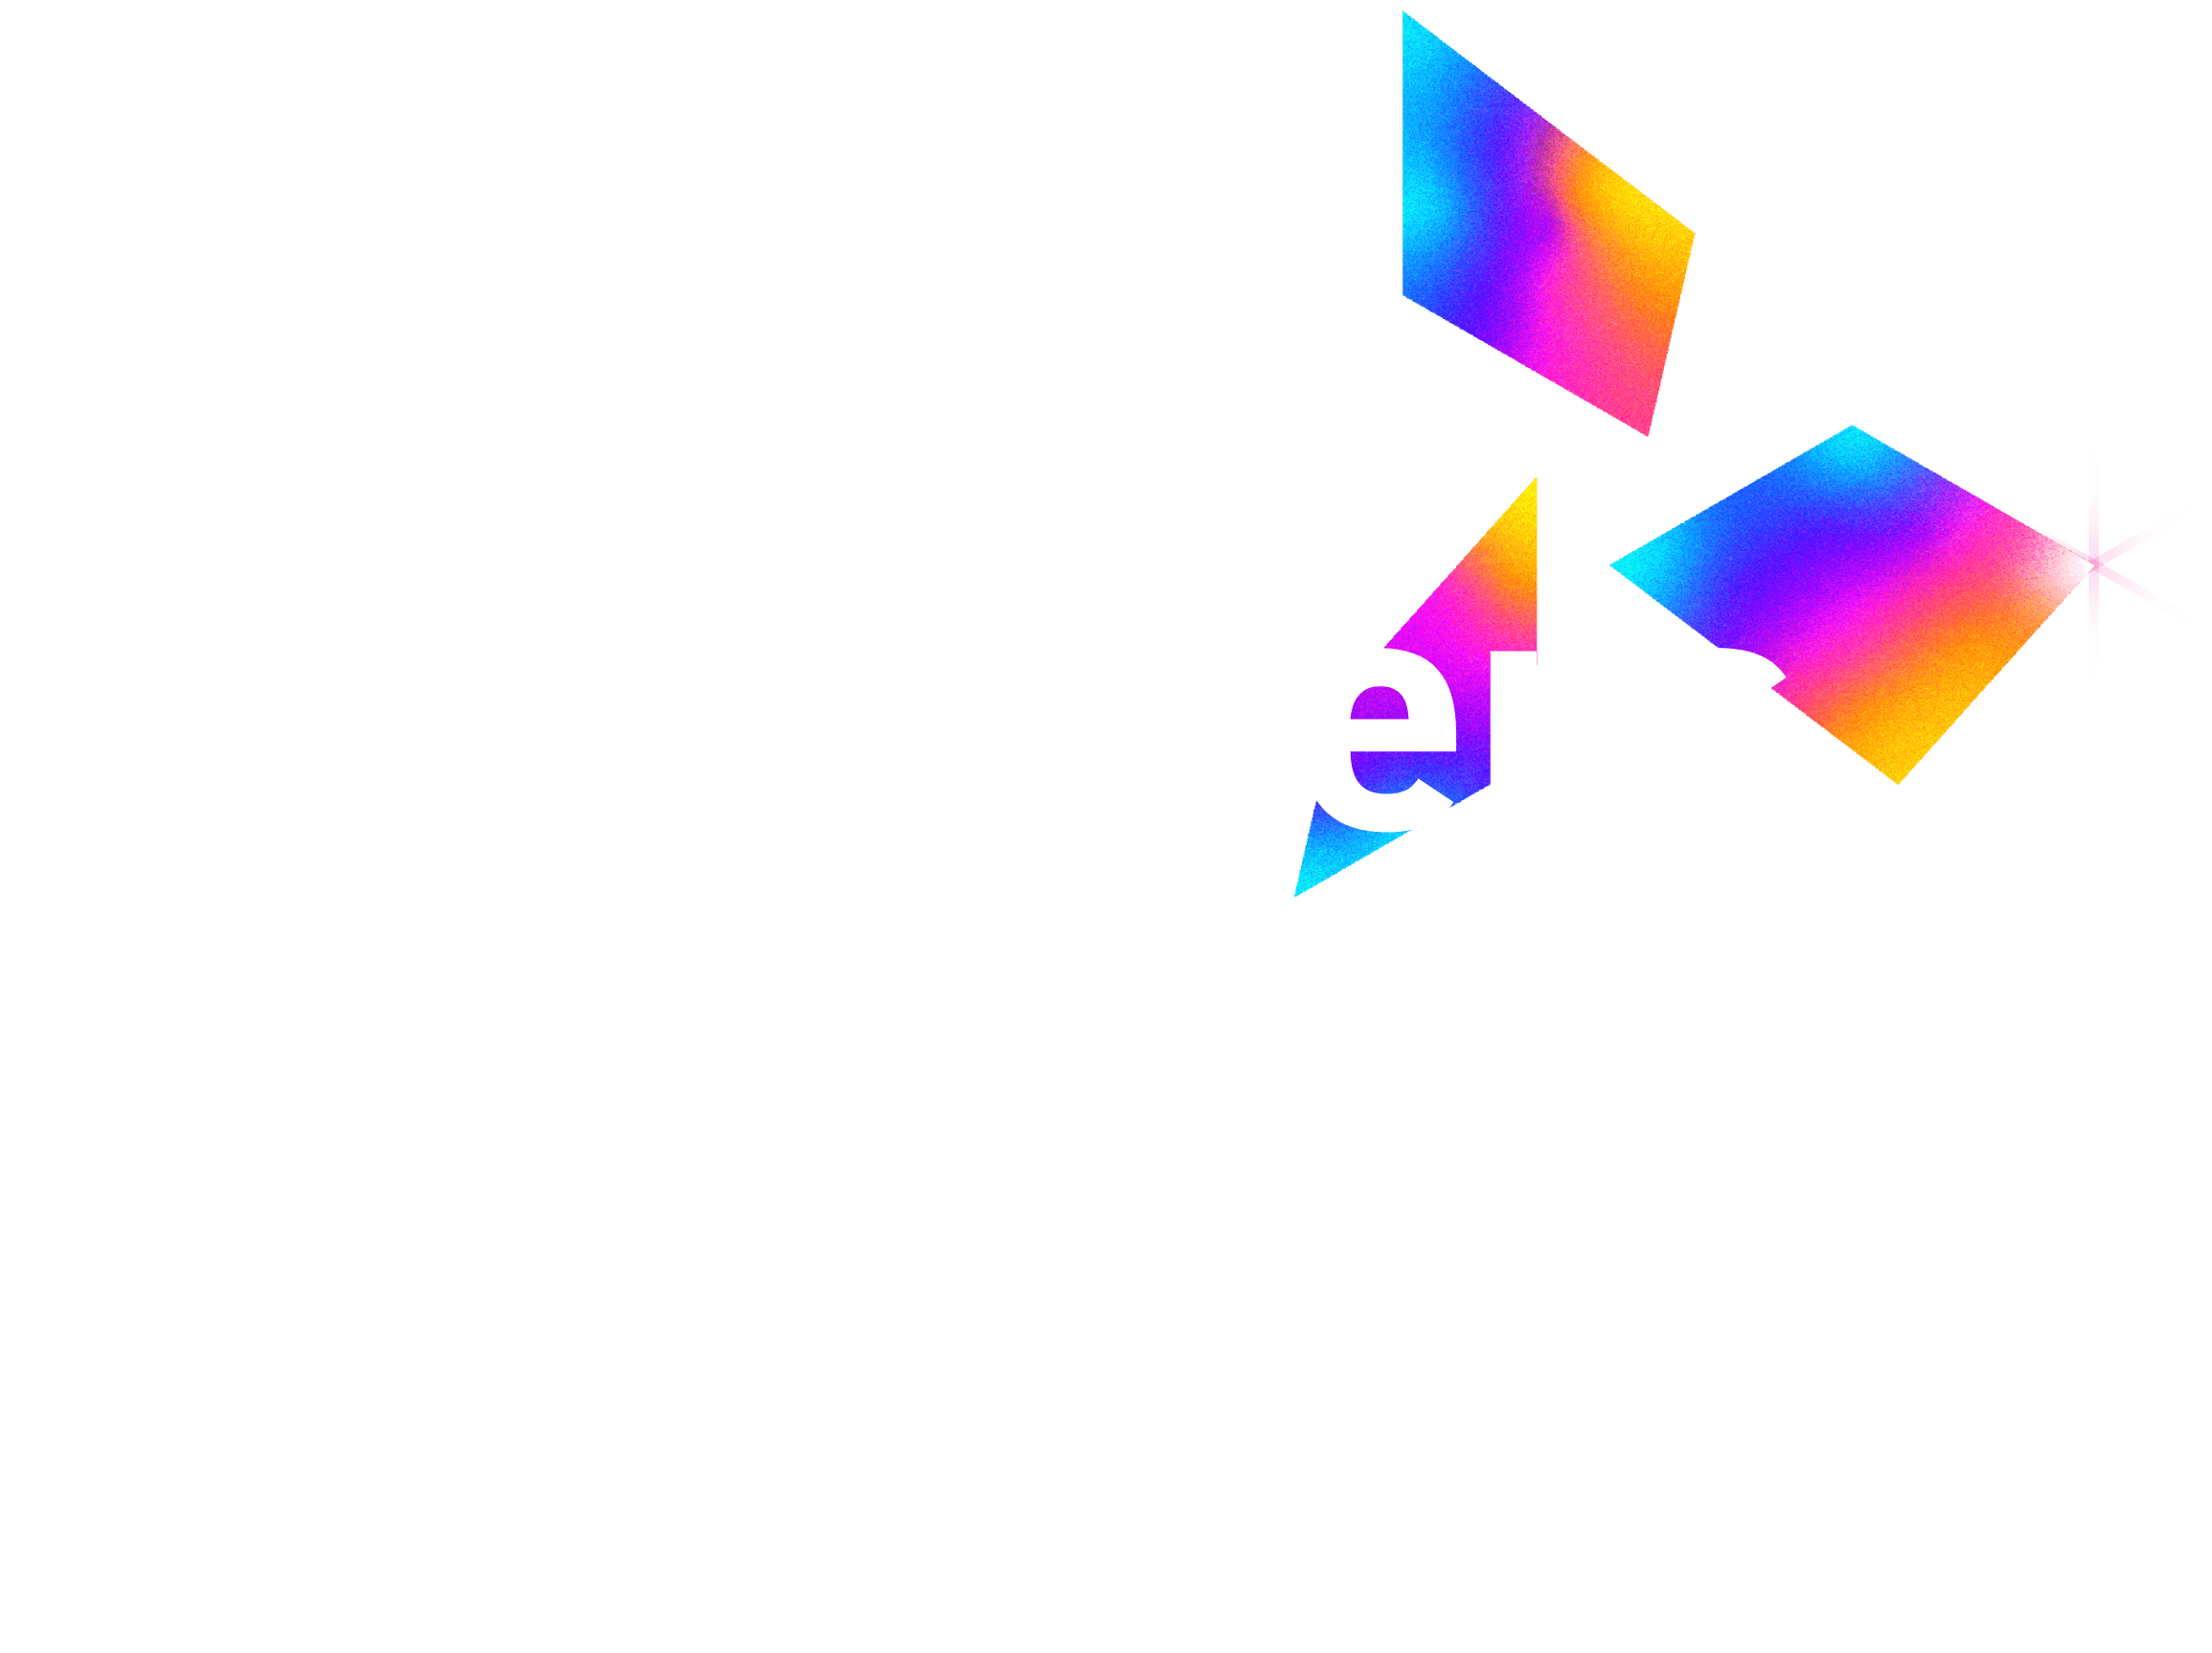 Climbers 2021